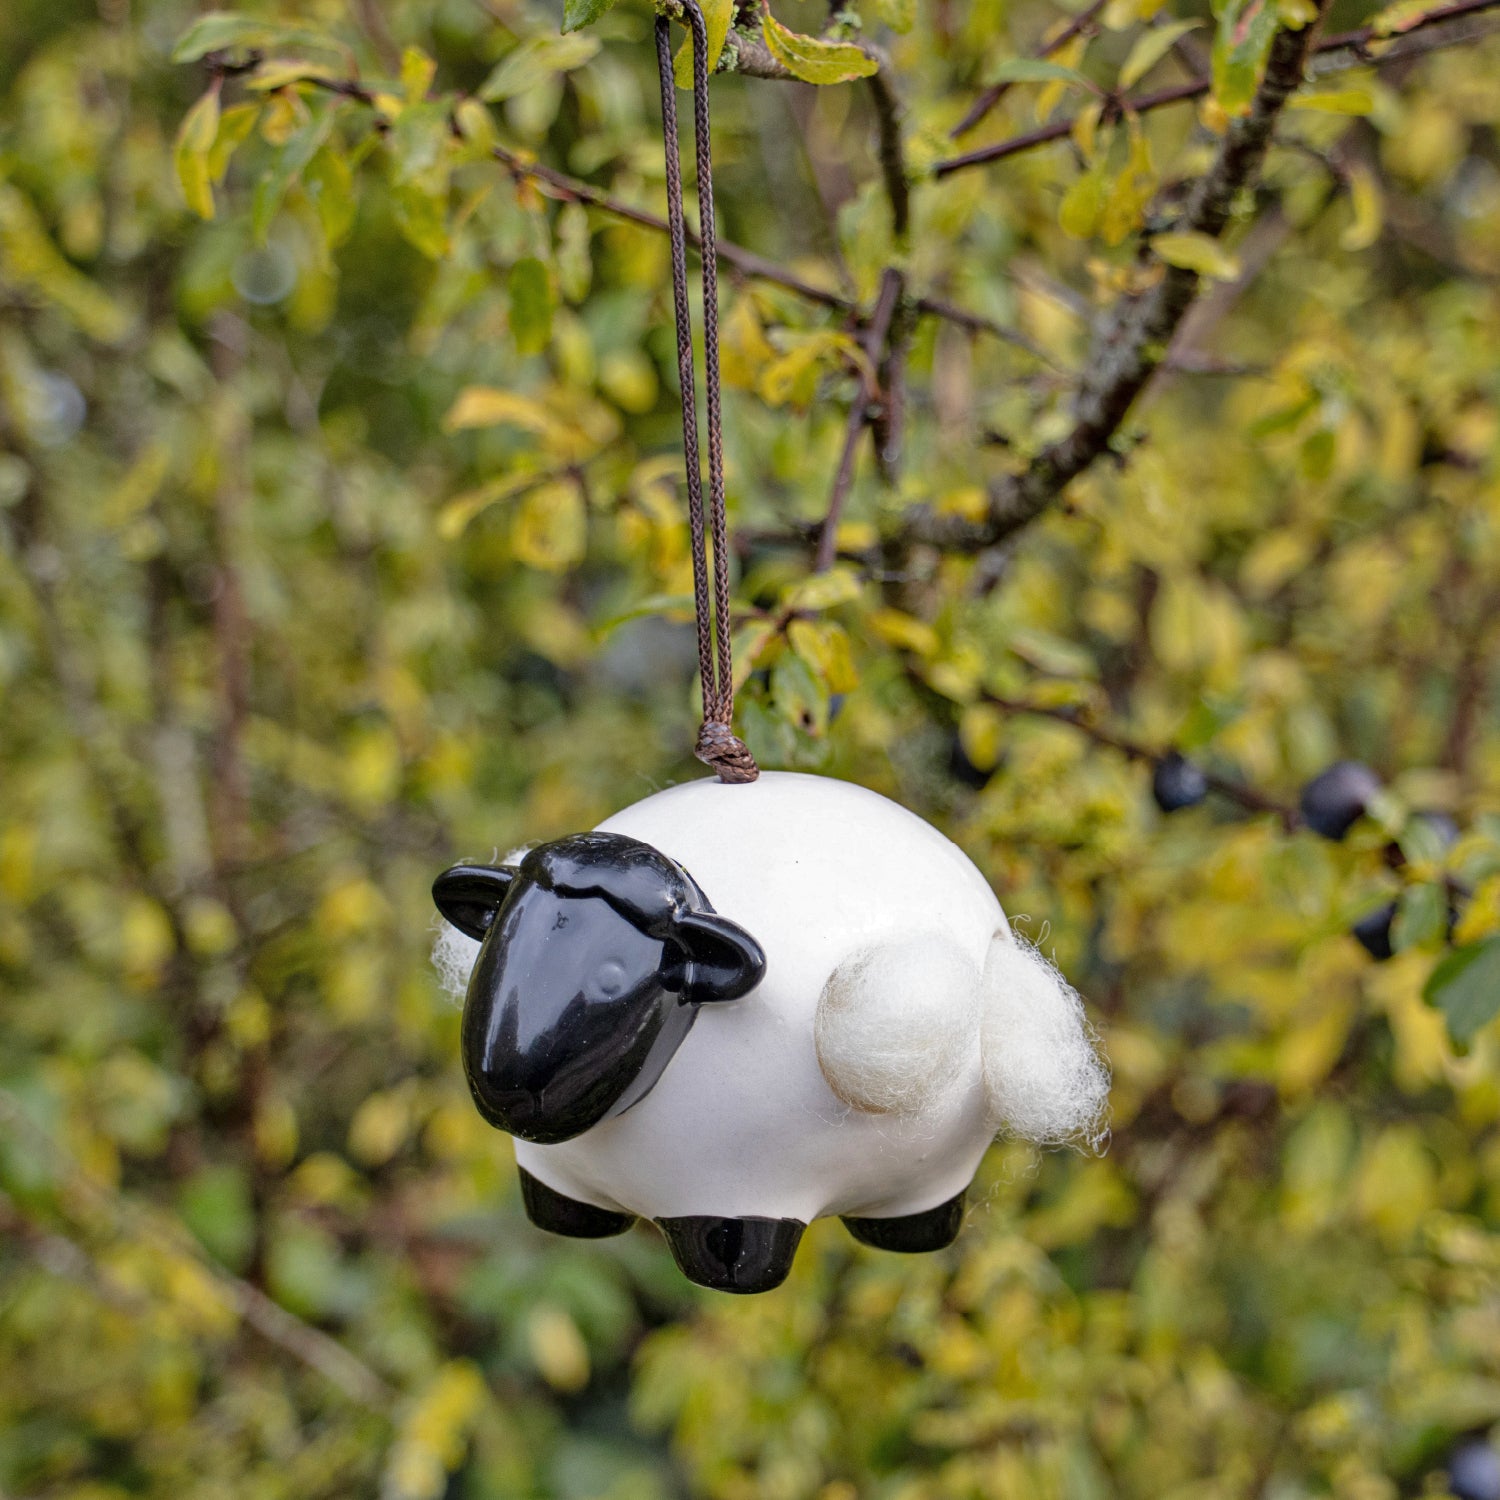 Hanging Ceramic Sheep With Nesting Wool | The Wildlife Community